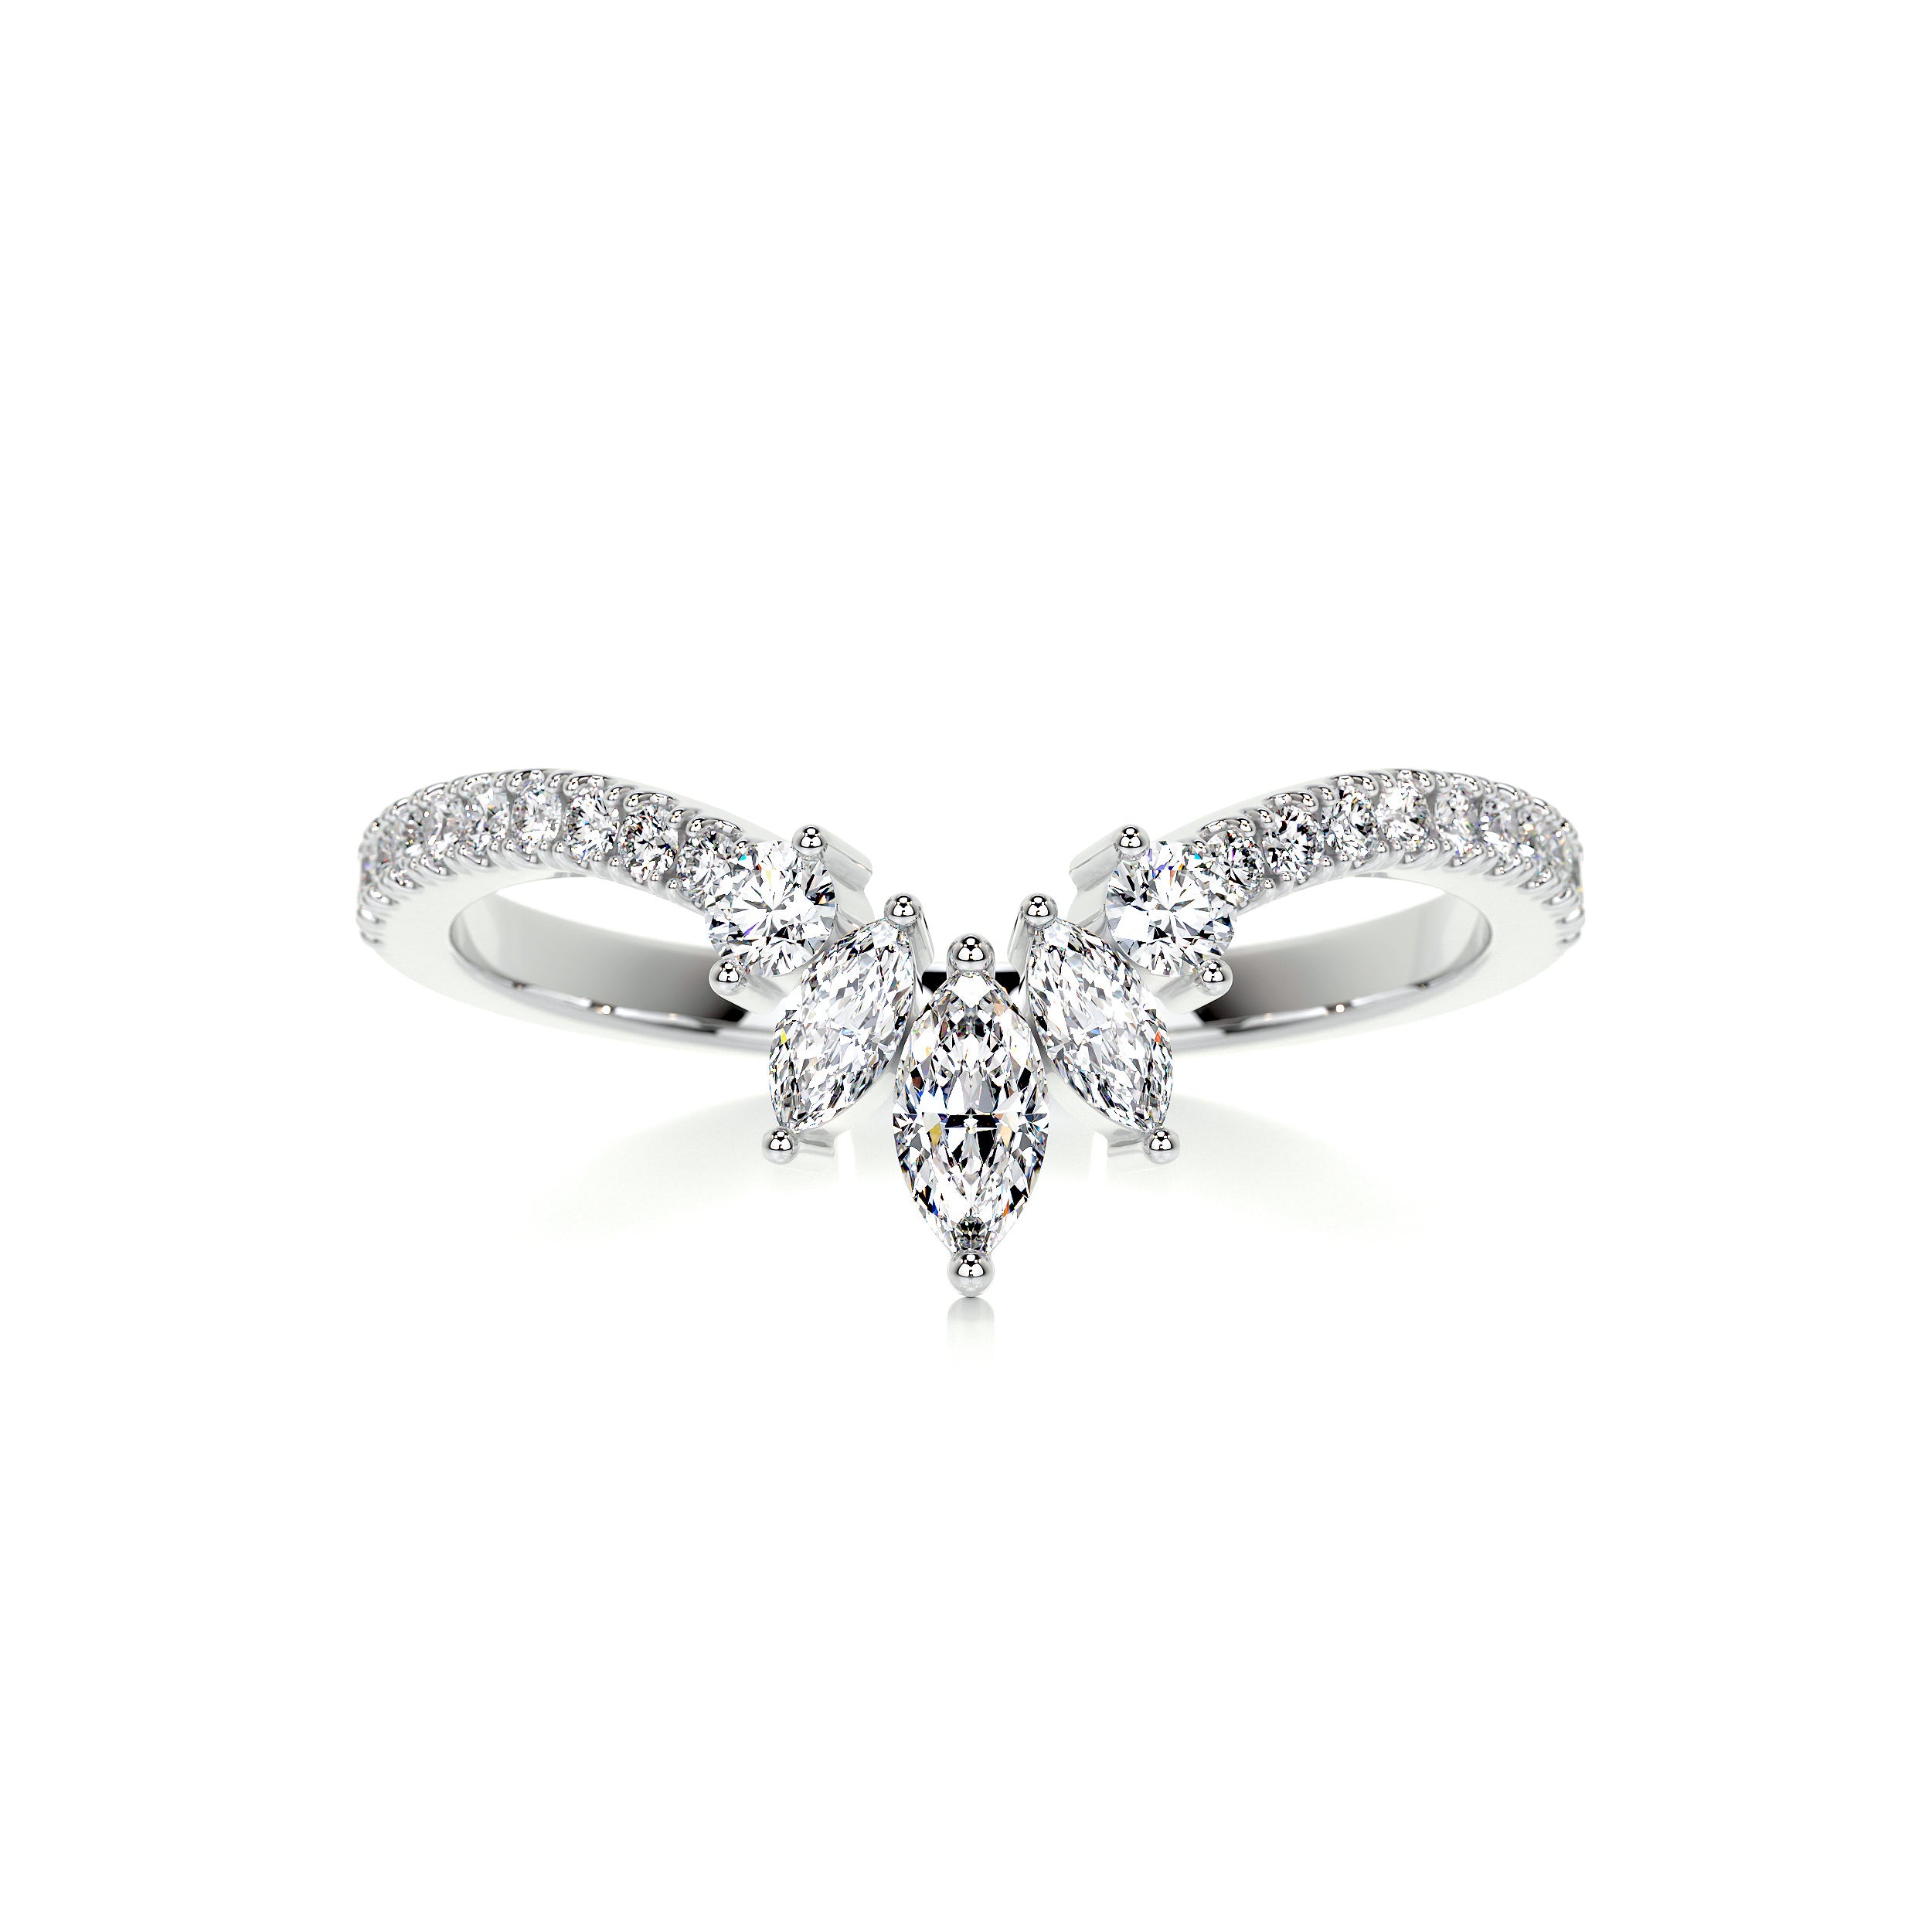 Lauren Diamond Wedding Ring   (0.30 Carat) -14K White Gold